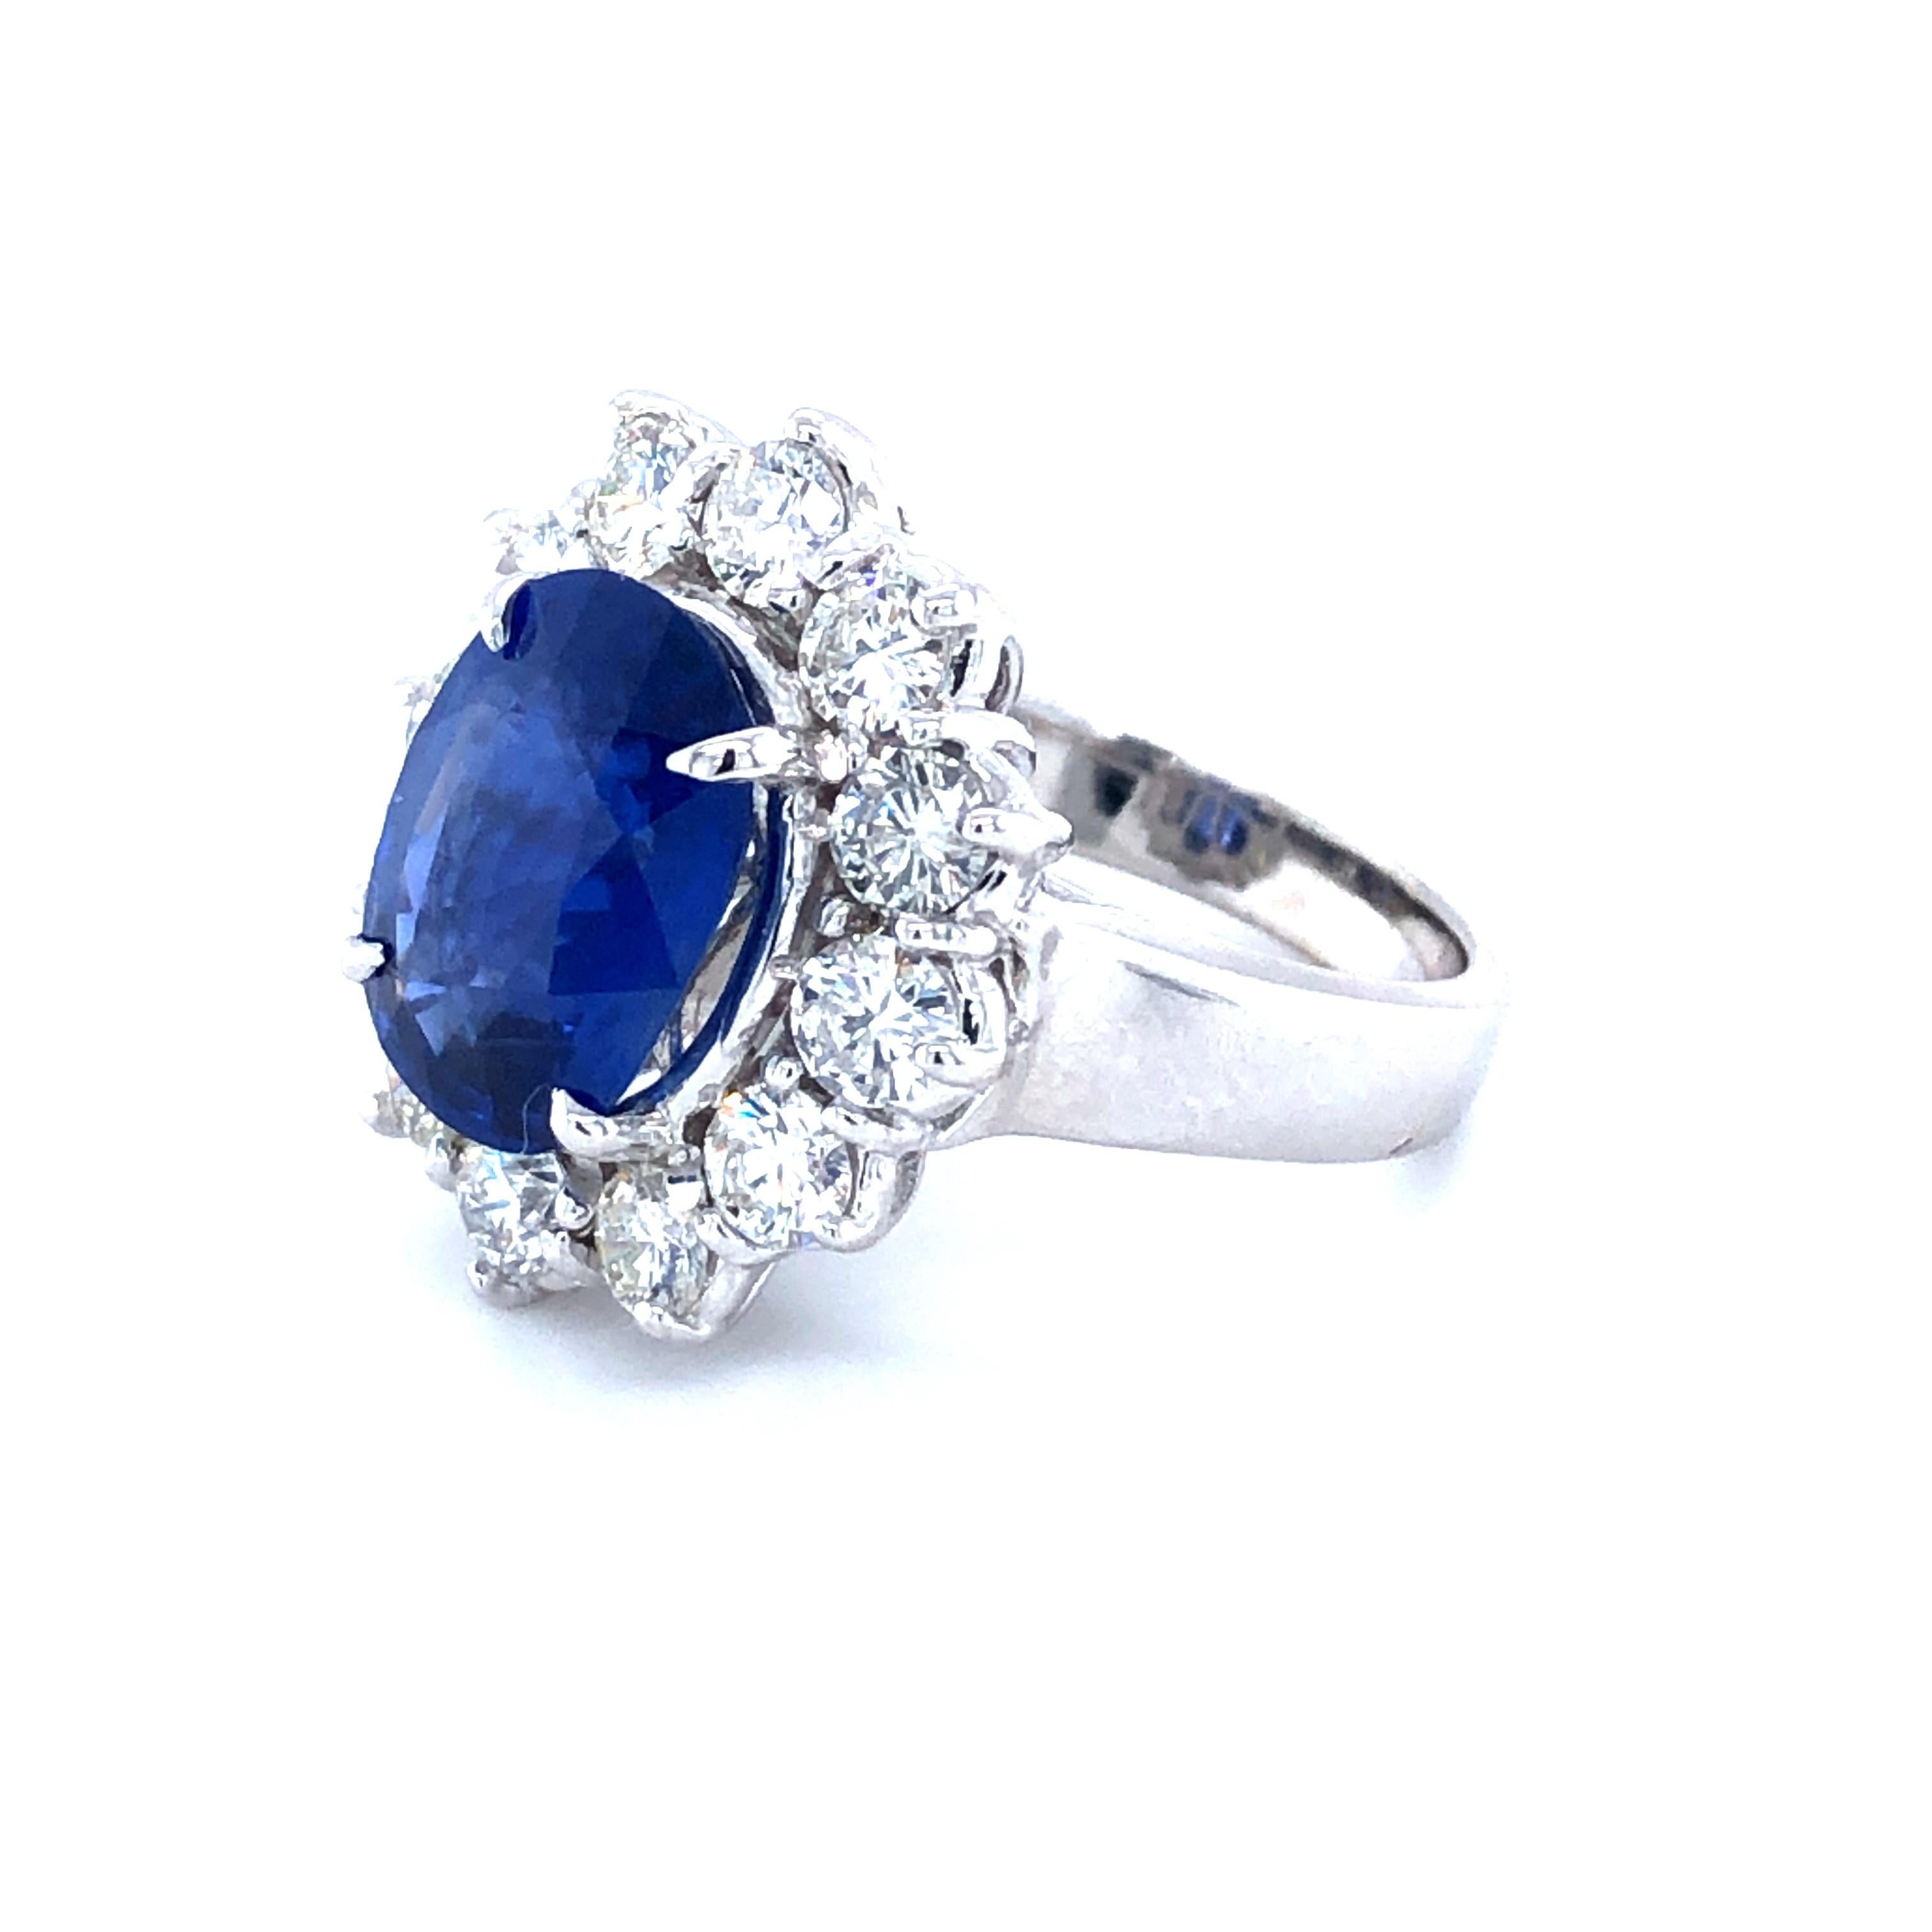 Oval Cut Rare Blue Sapphire 5.91 Ct Burma No Heat & 2.40 Ct Diamonds Ring, AGL Certified